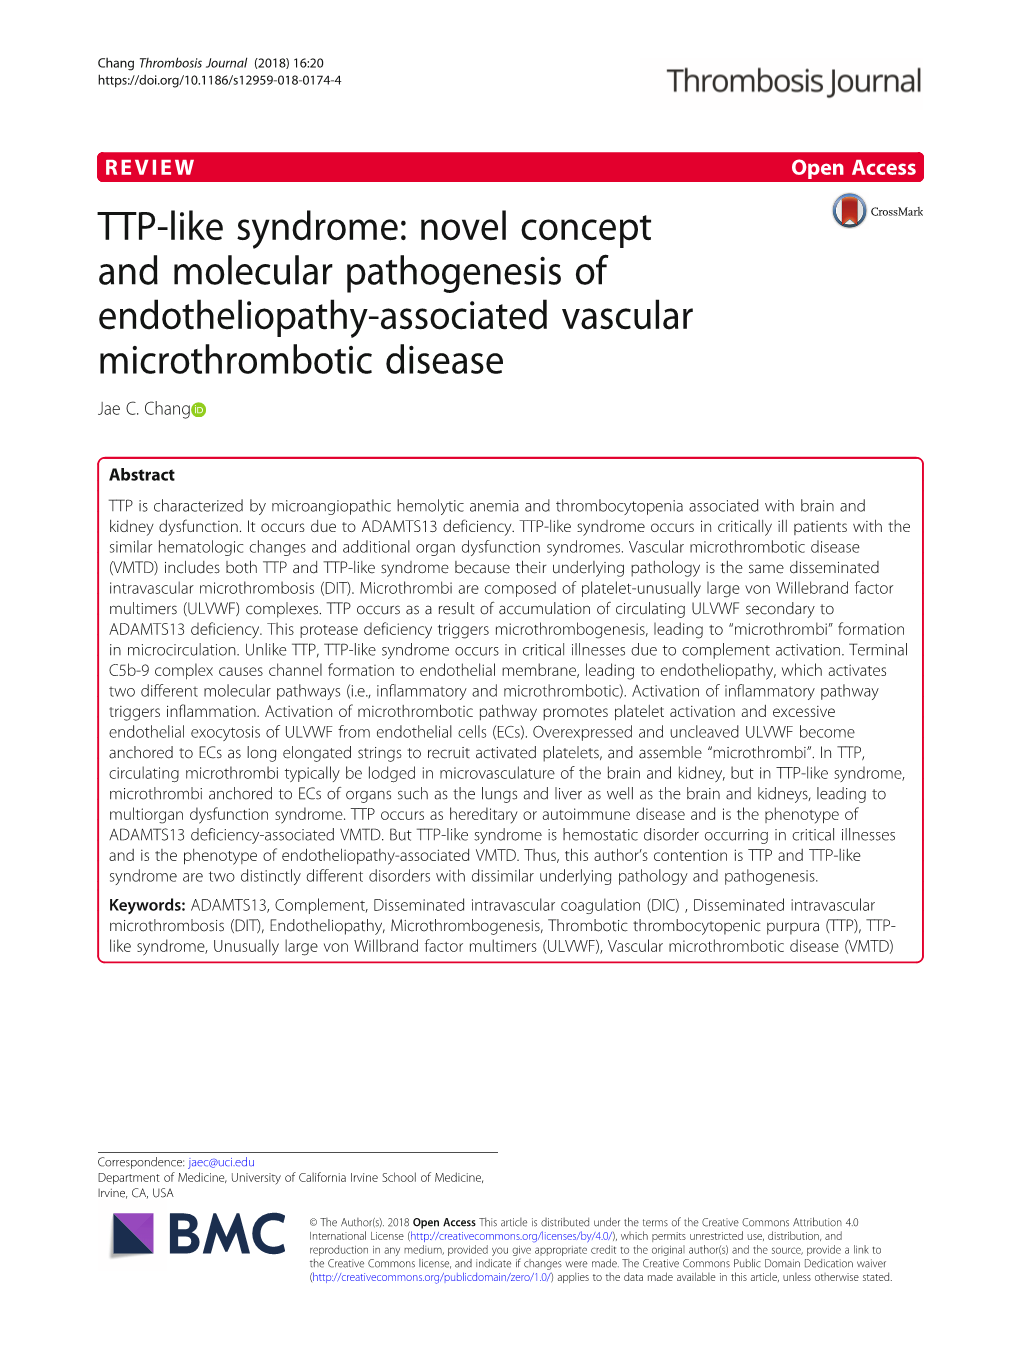 TTP-Like Syndrome: Novel Concept and Molecular Pathogenesis of Endotheliopathy-Associated Vascular Microthrombotic Disease Jae C